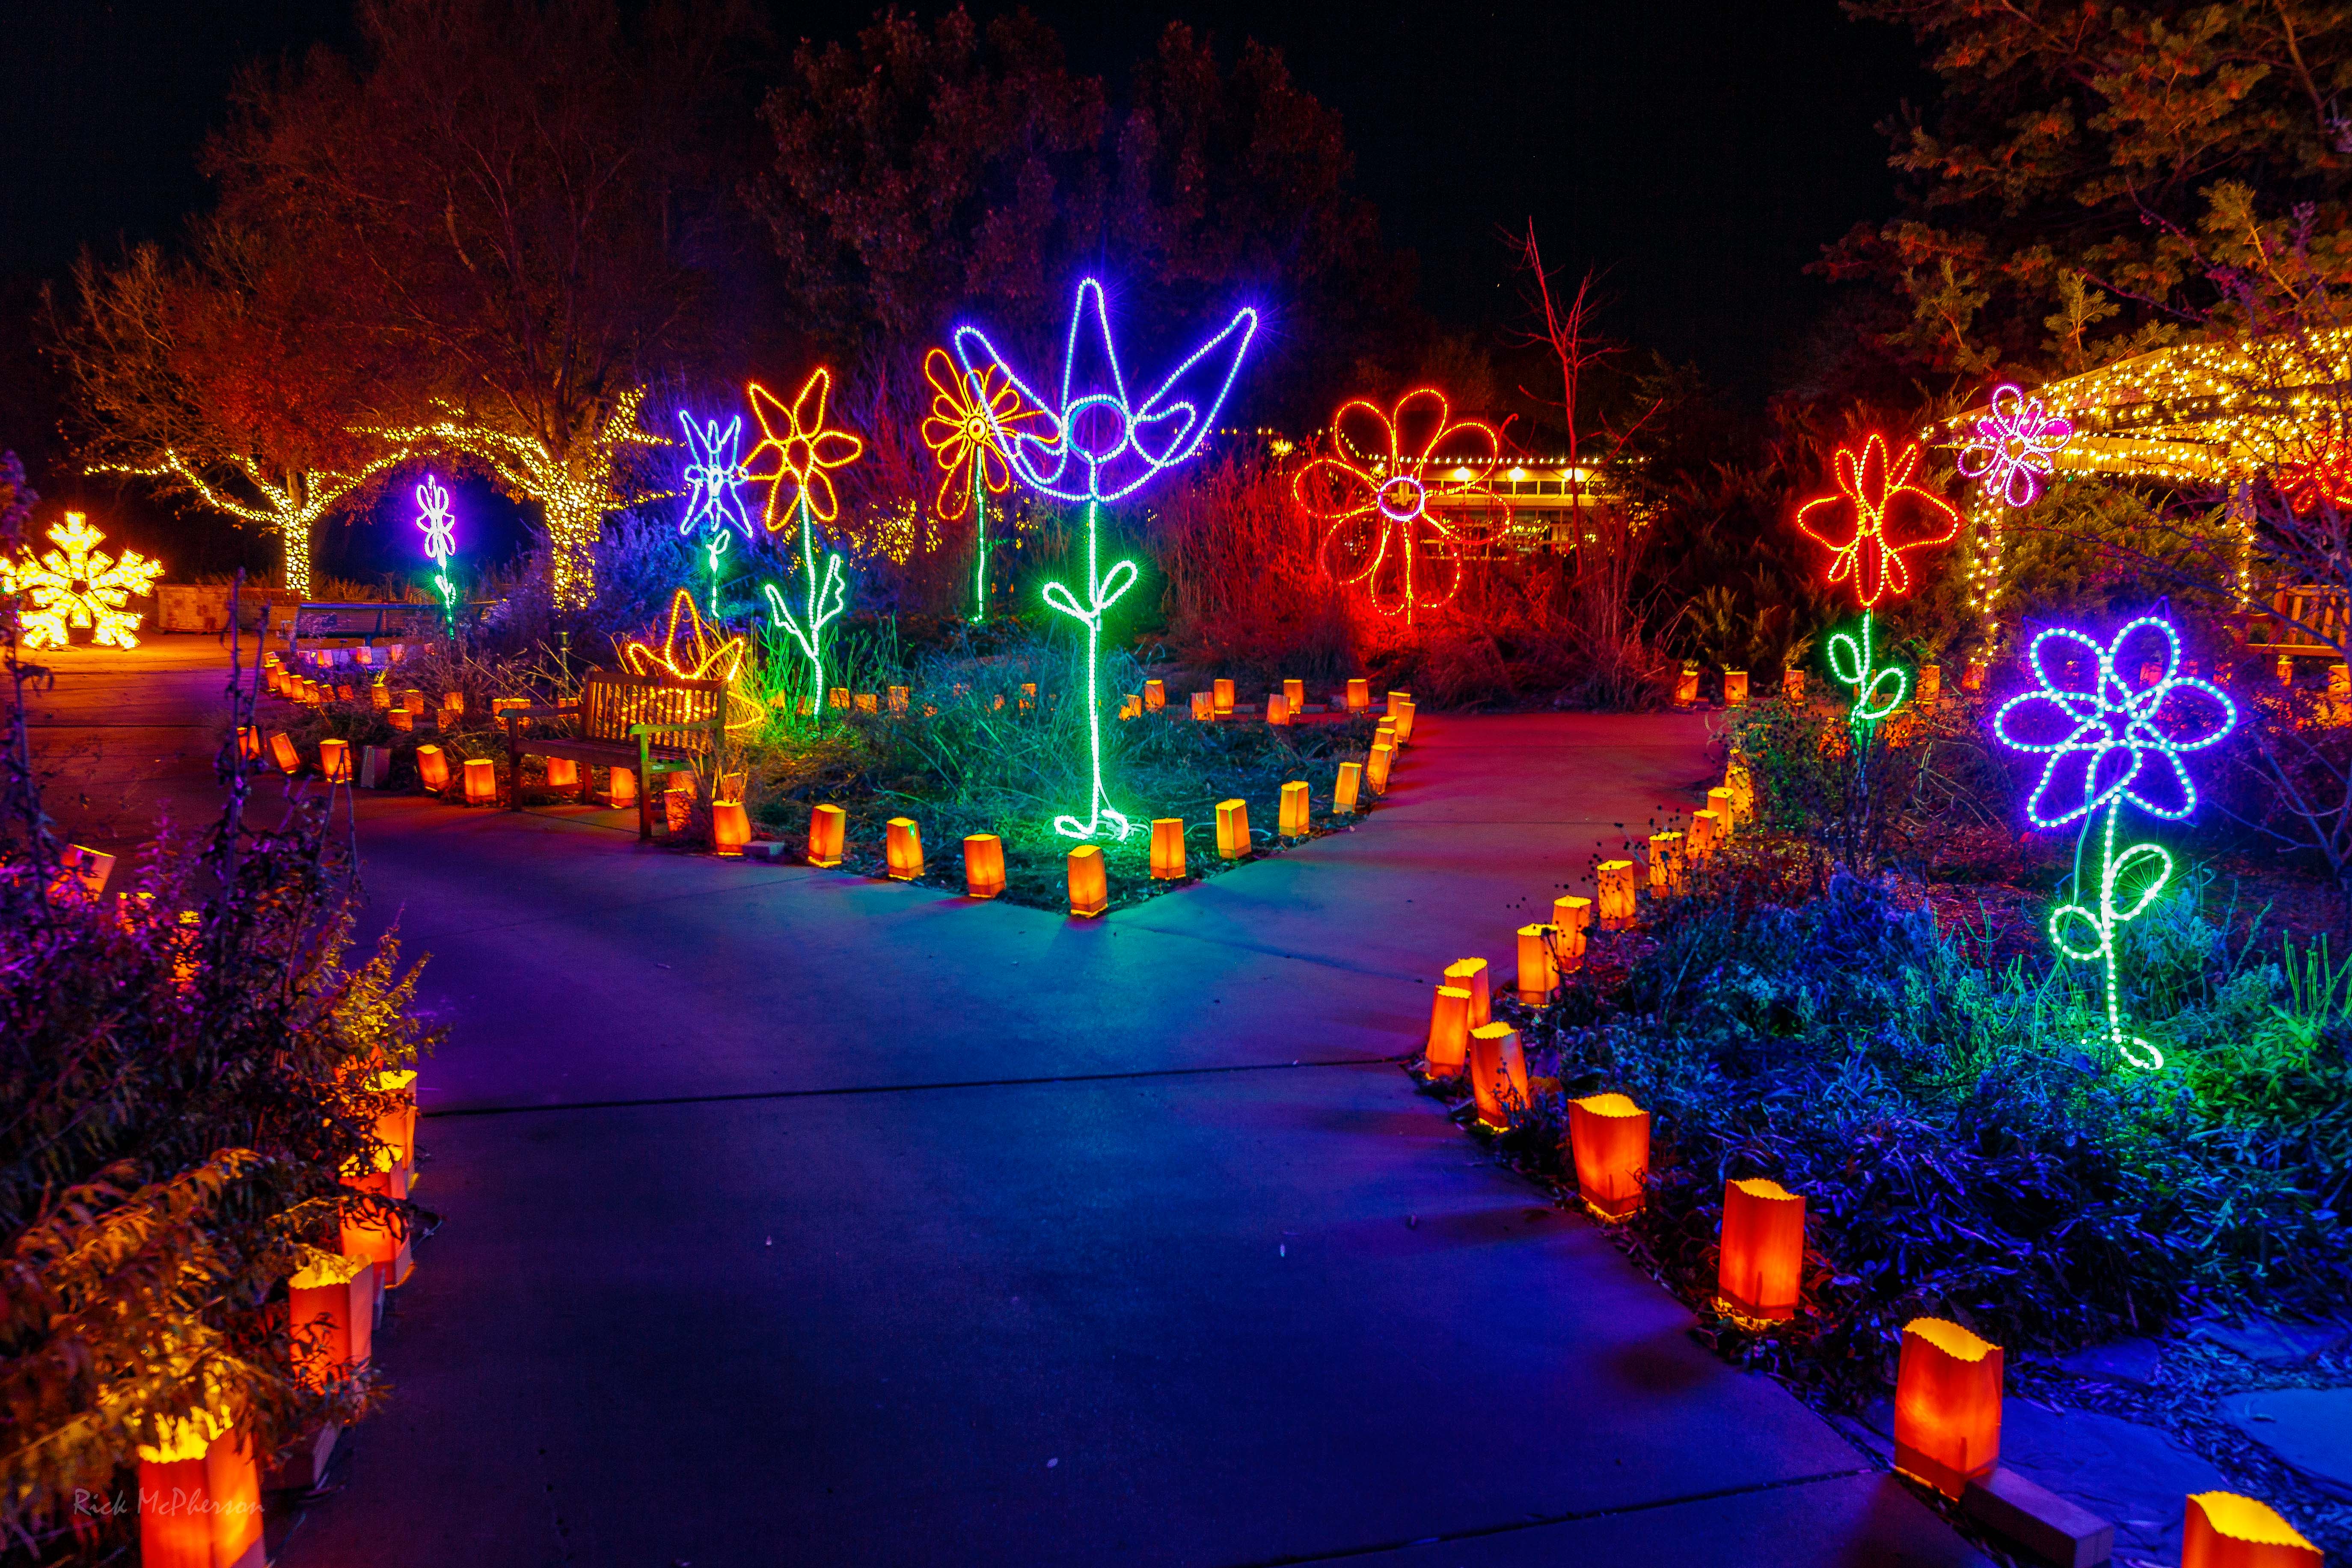 Illuminations Premier Light Show Returns to Botanica November 18-January 1